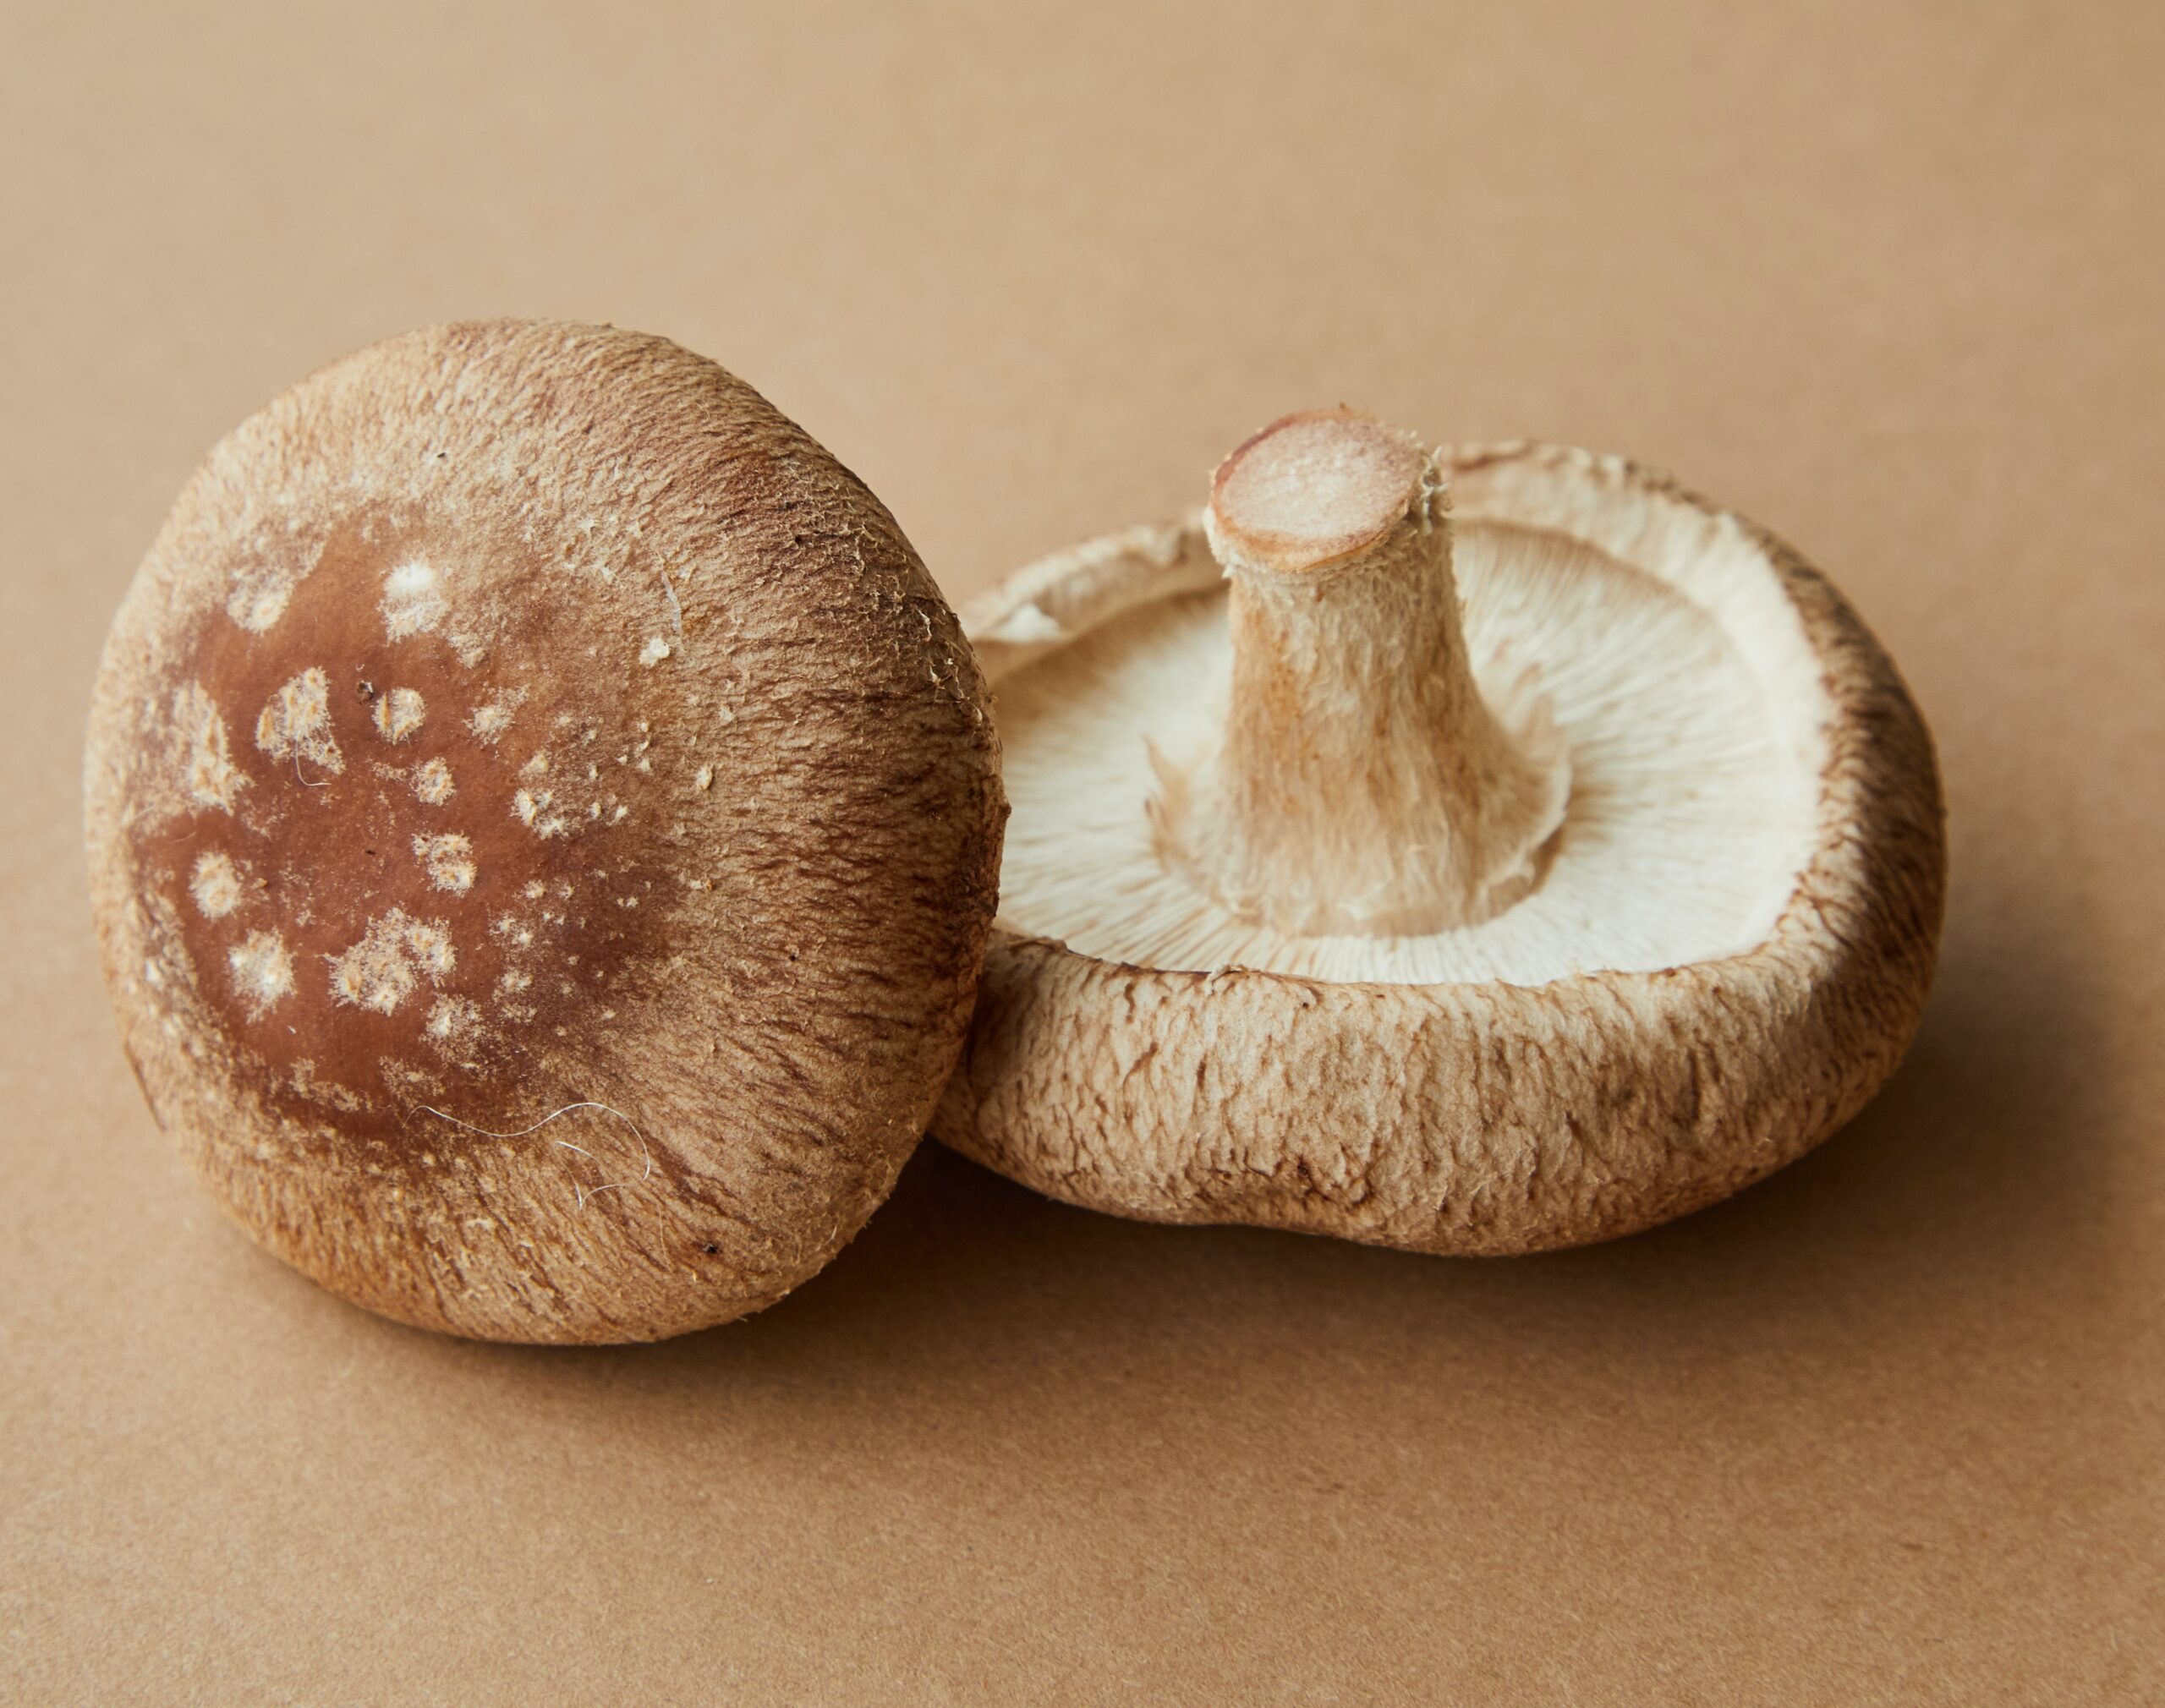 The Caring Mushroom Shiitake